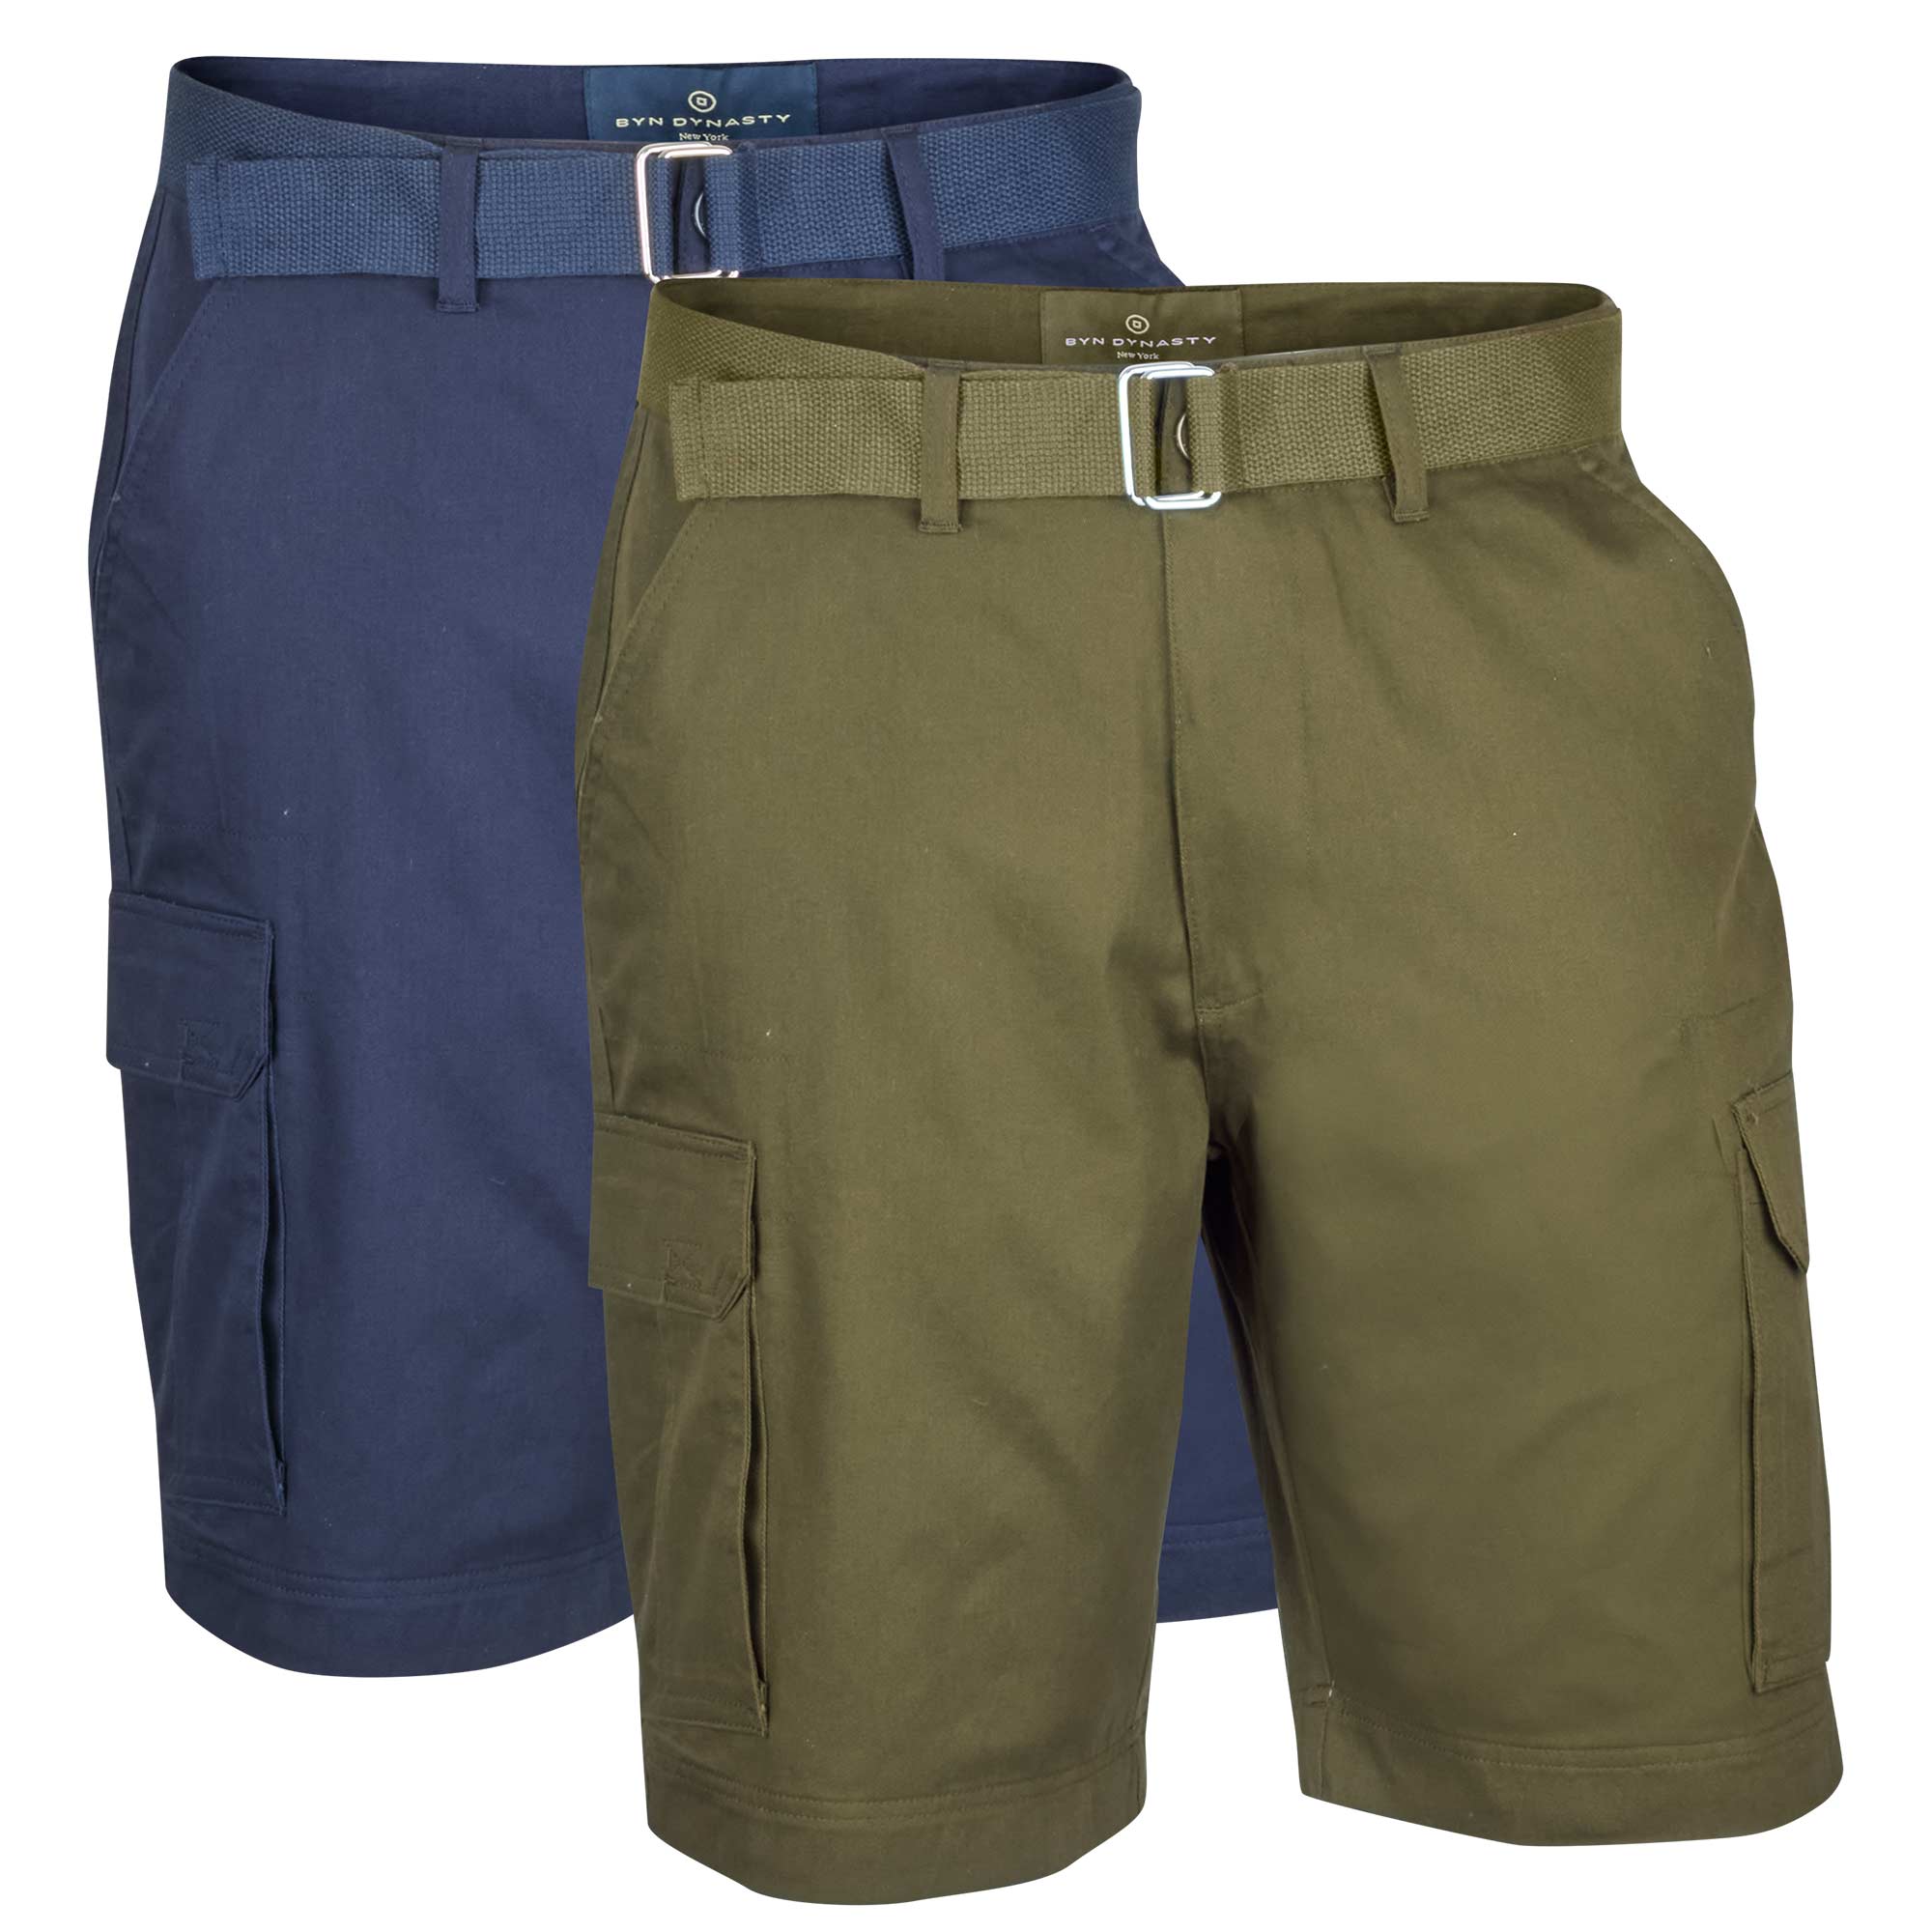 Men's Cargo Shorts - 2 Pack